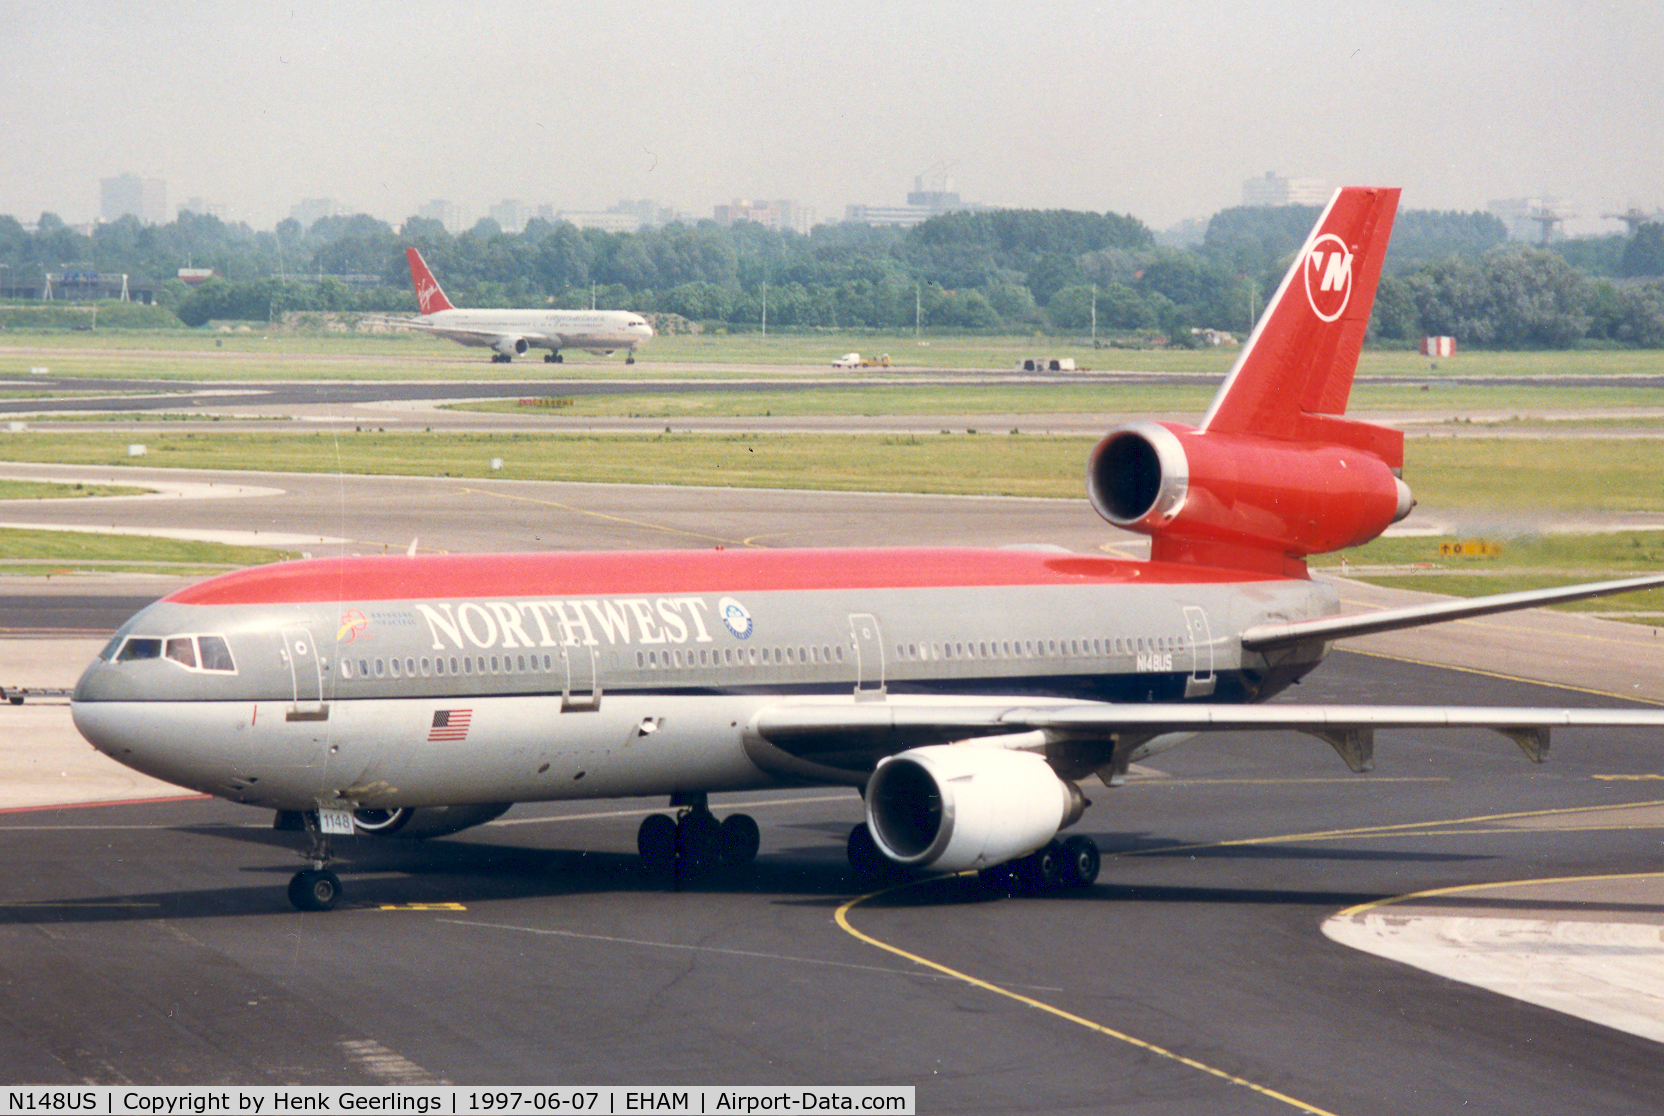 N148US, 1973 Douglas DC-10-40 C/N 46757, Northwest. In the background B767 from Martinair lsd to Virgin